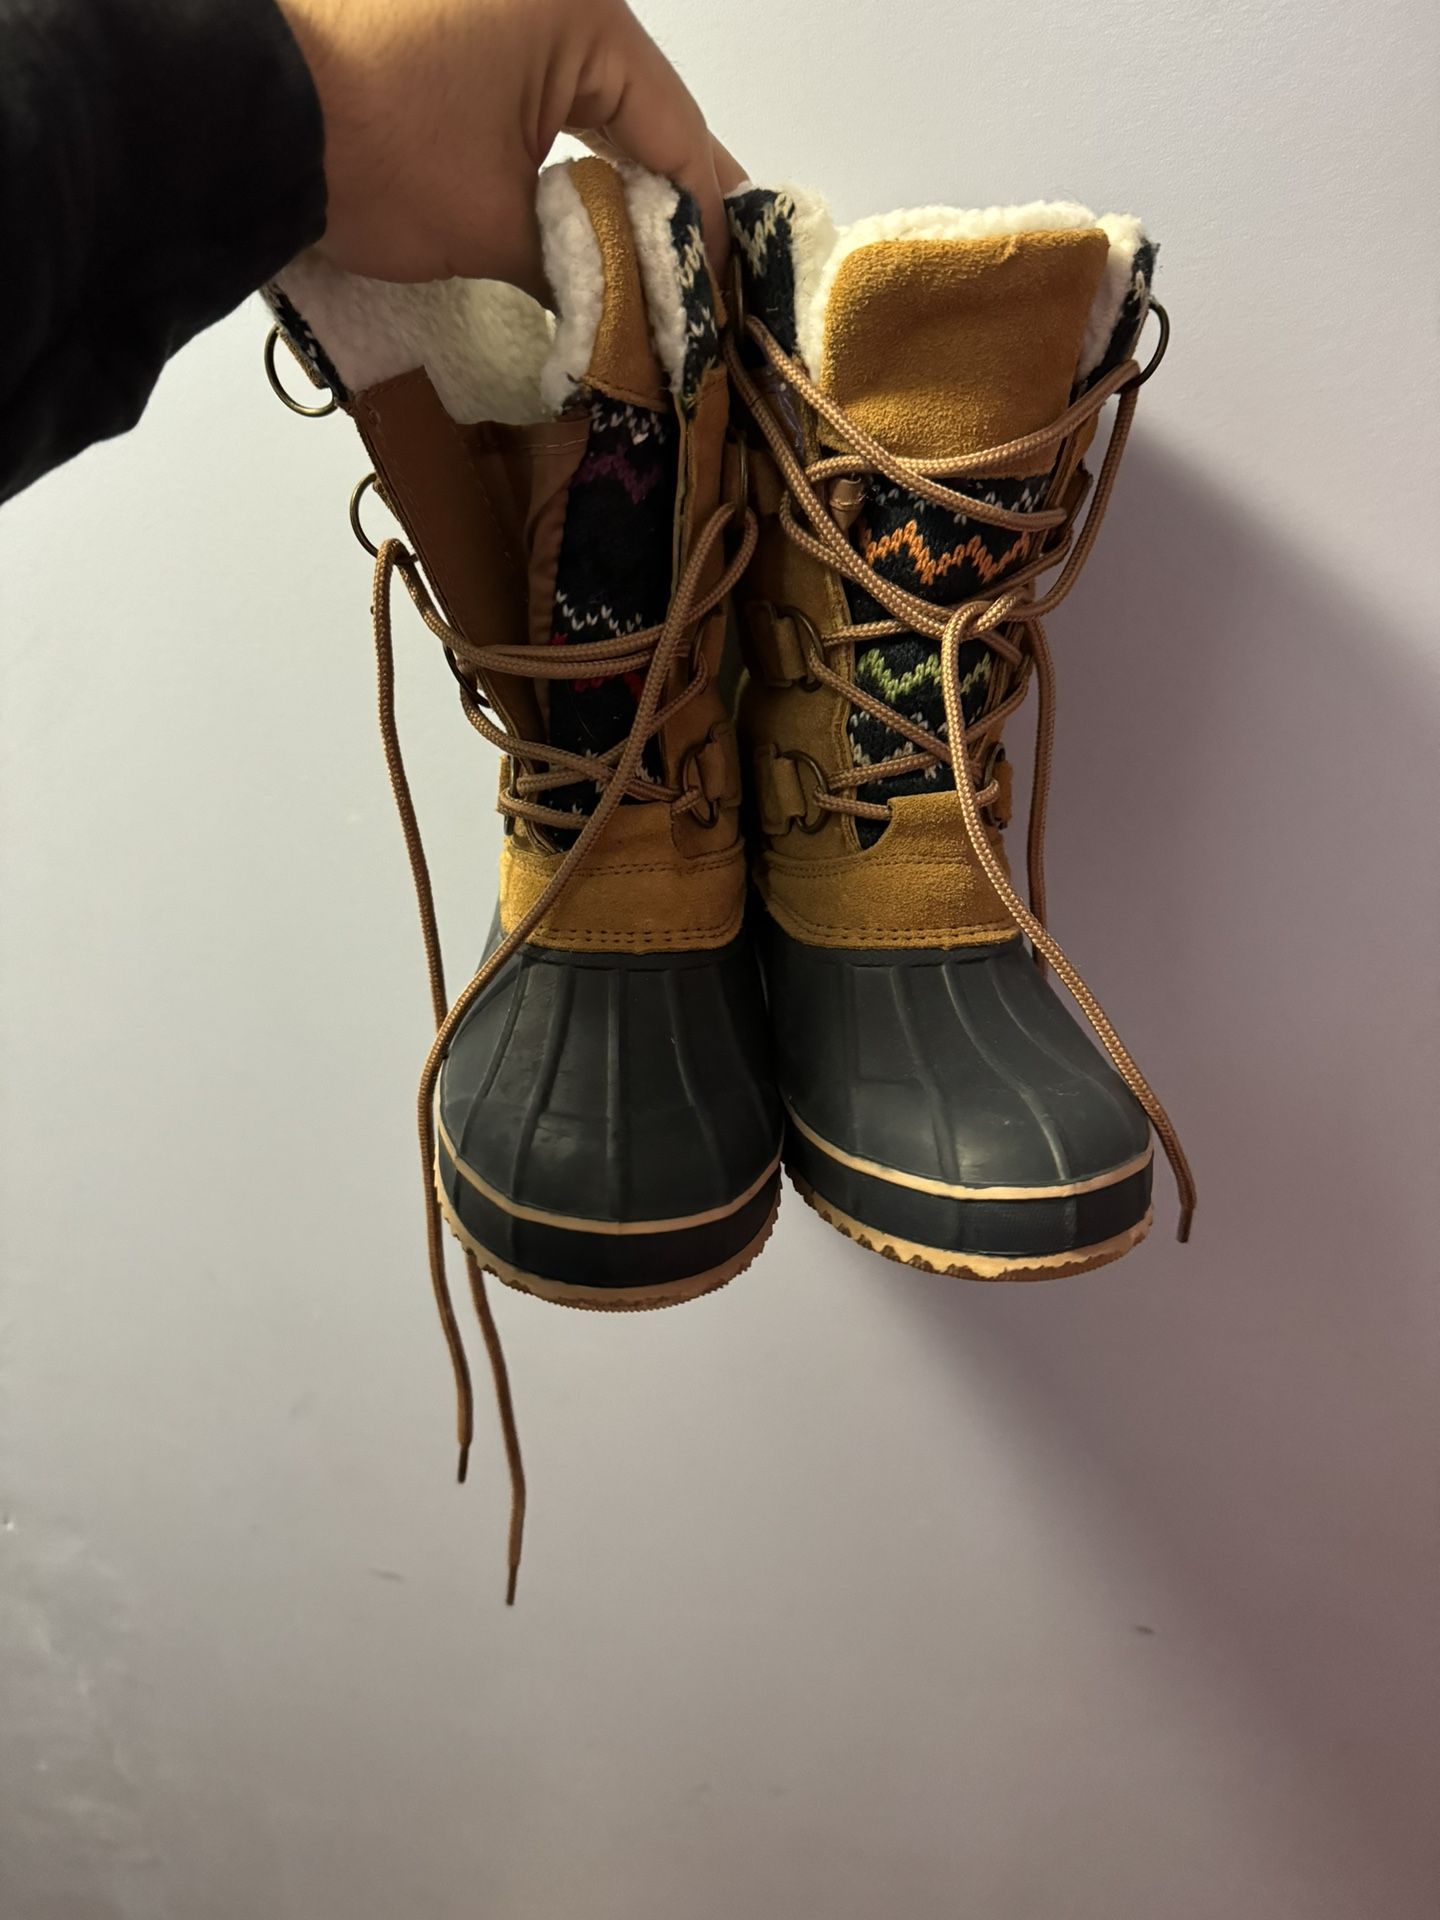 Women’s Snow Boots Size 7